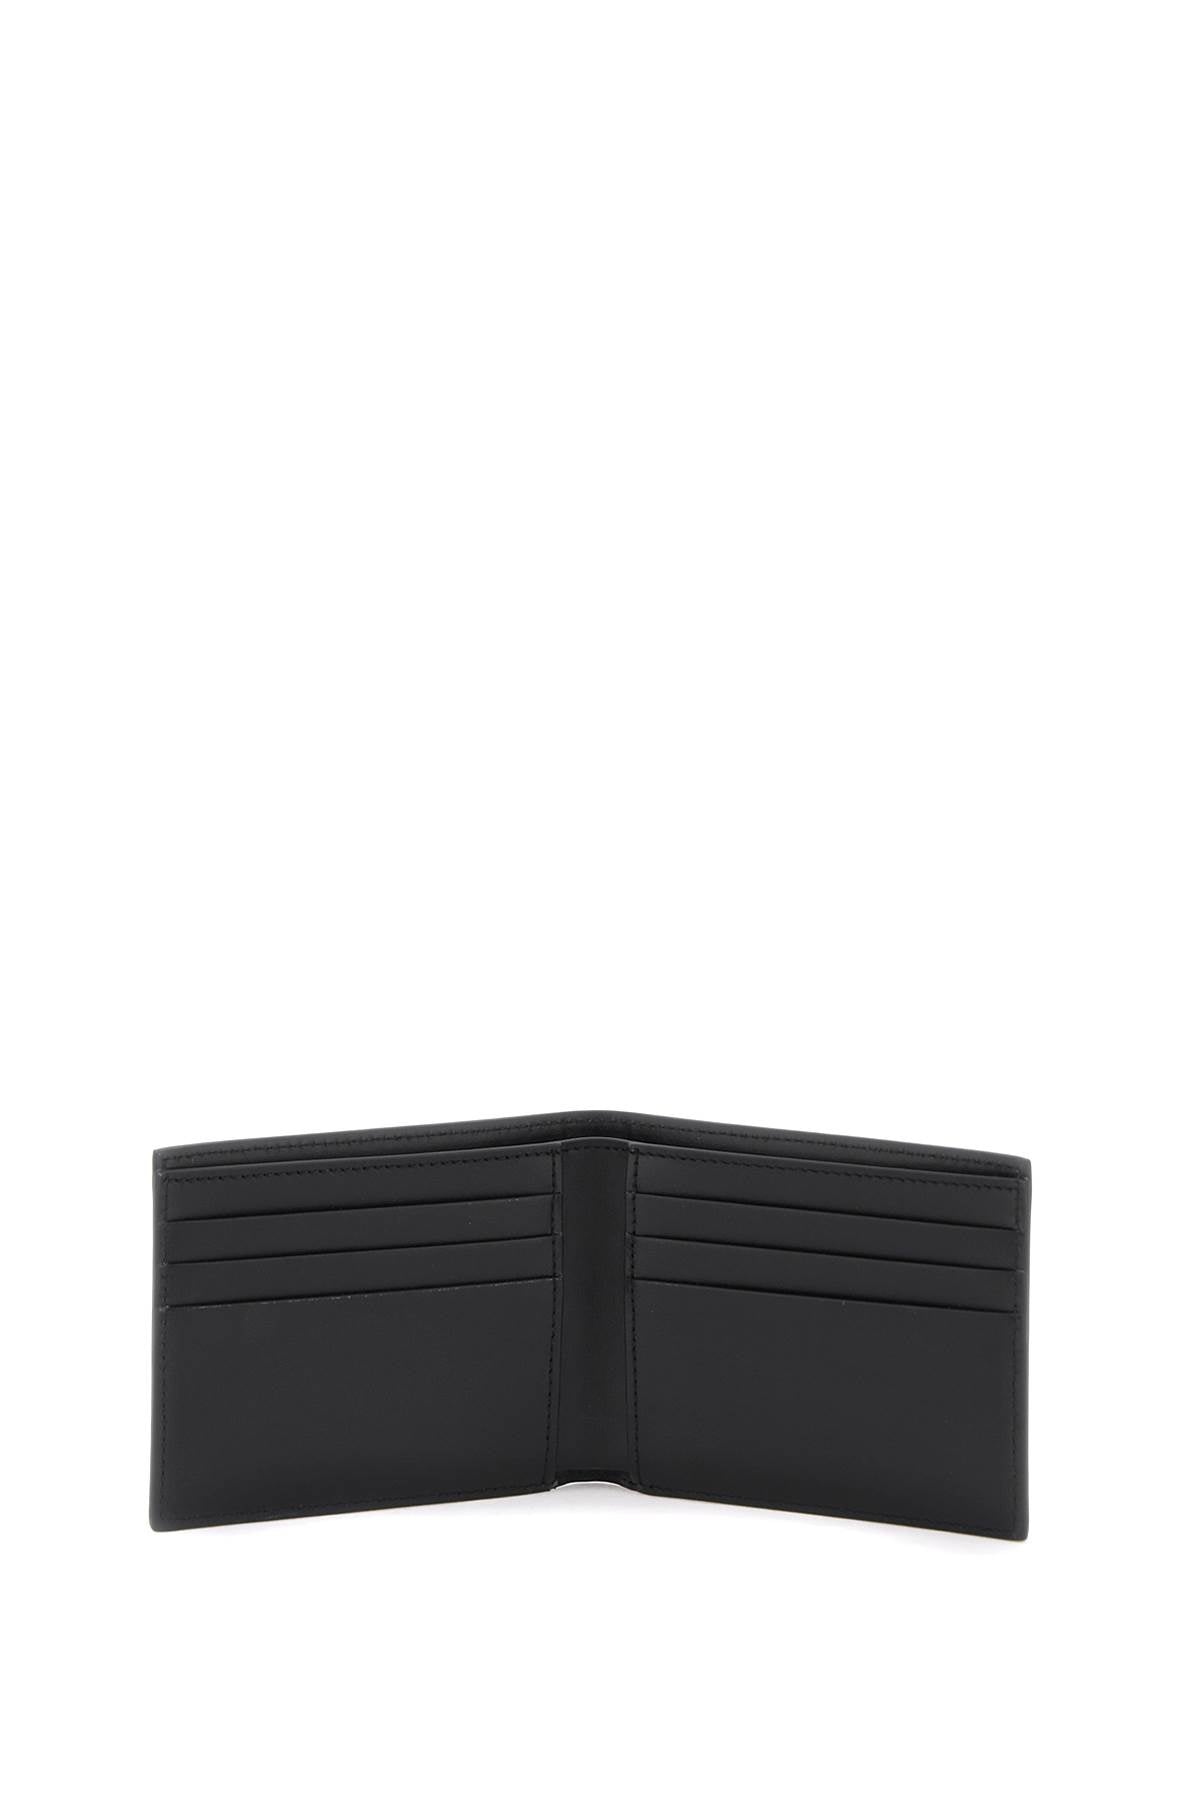 Off-white bookish logo bi-fold wallet-1